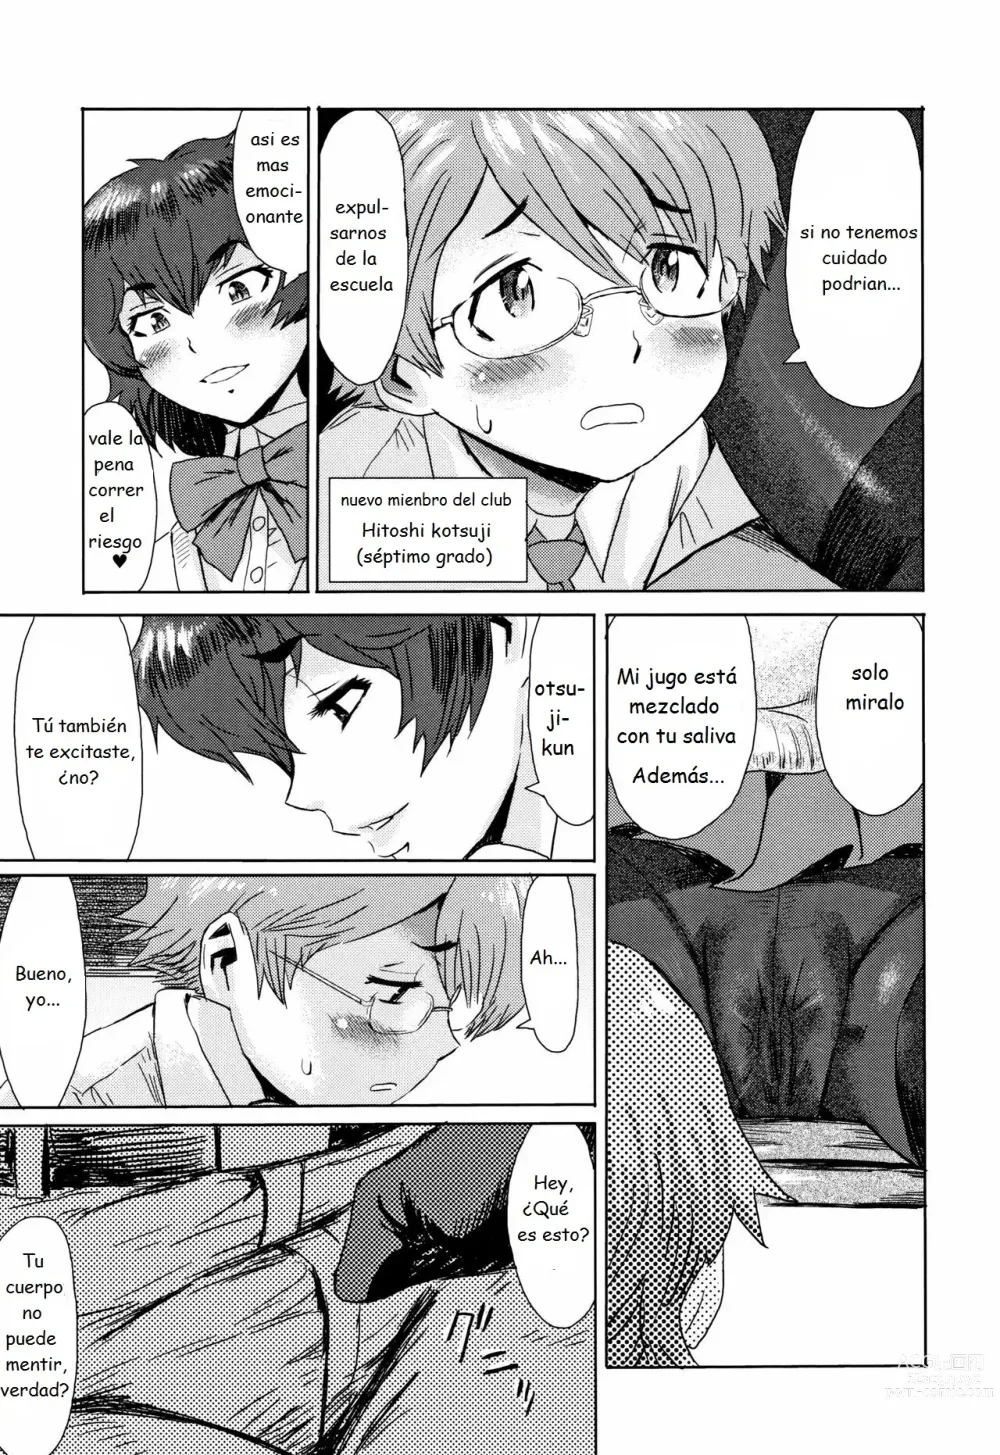 Page 5 of manga Bungeibu no Ookami